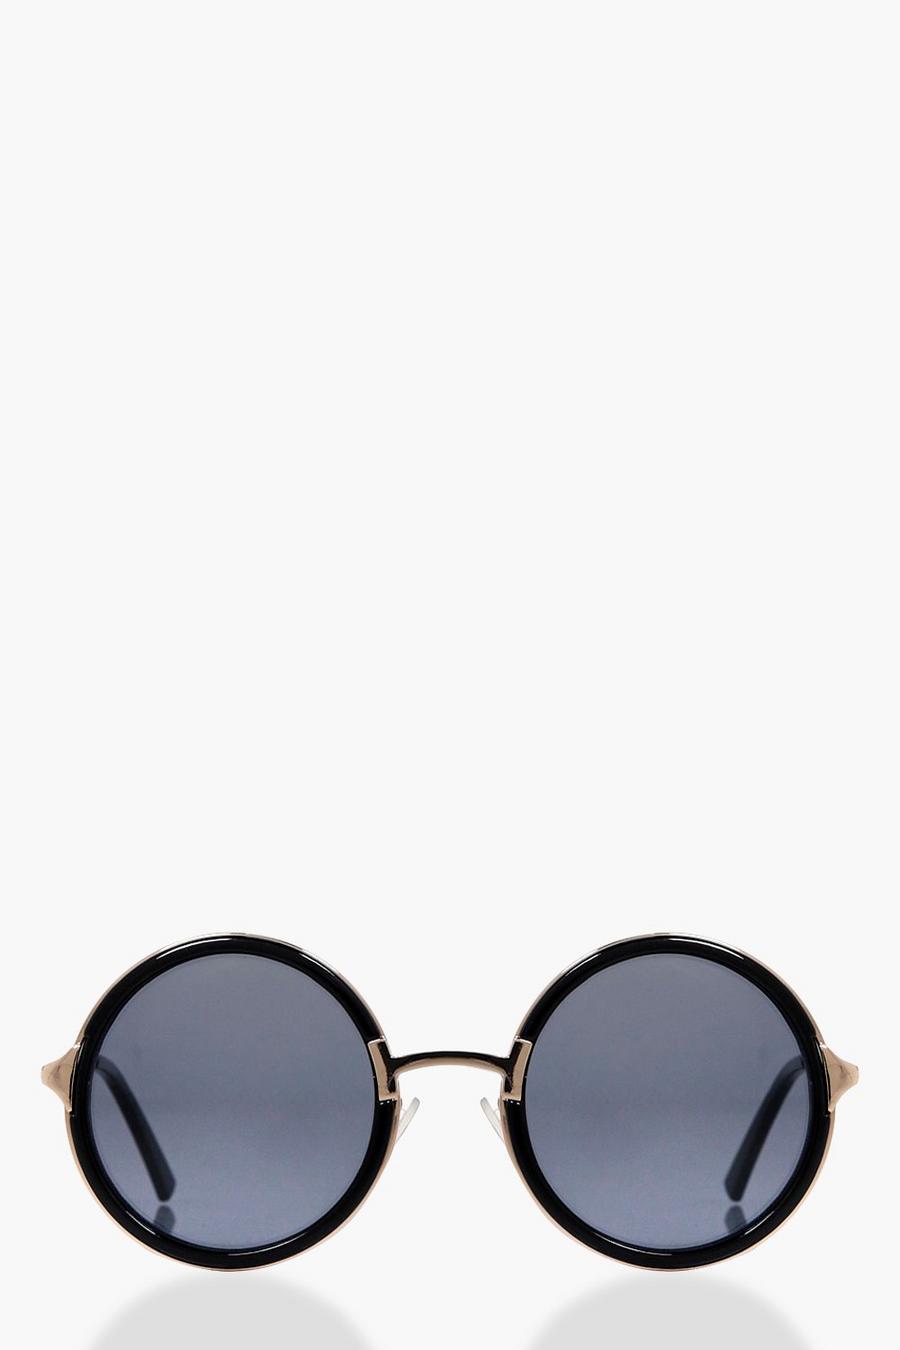 Smokey Black Contrast Round Sunglasses image number 1